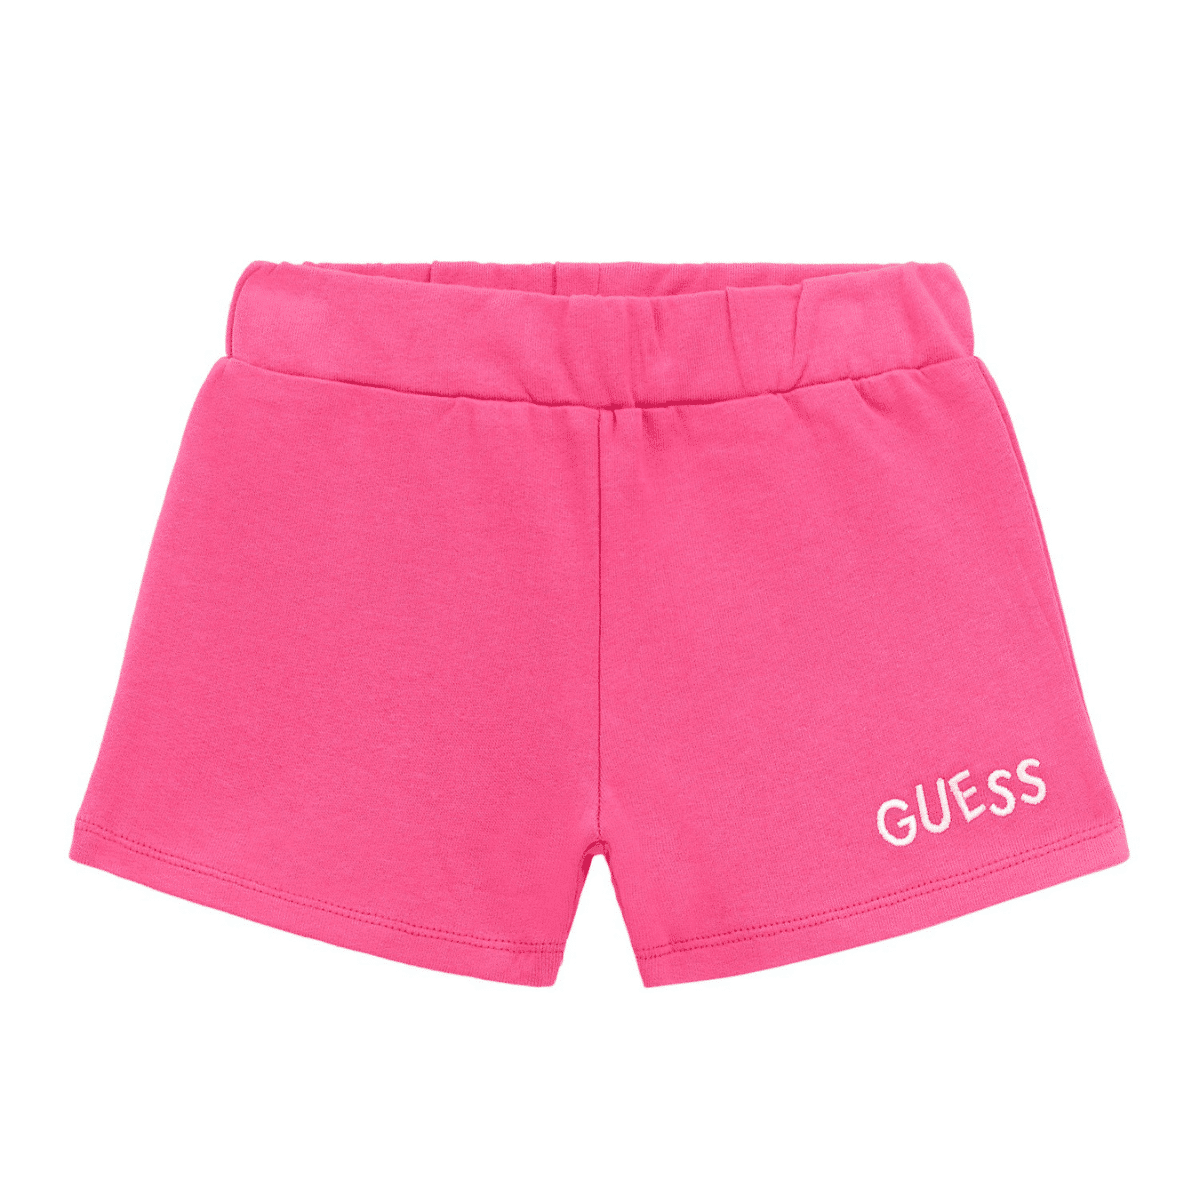 guess girls pink shorts